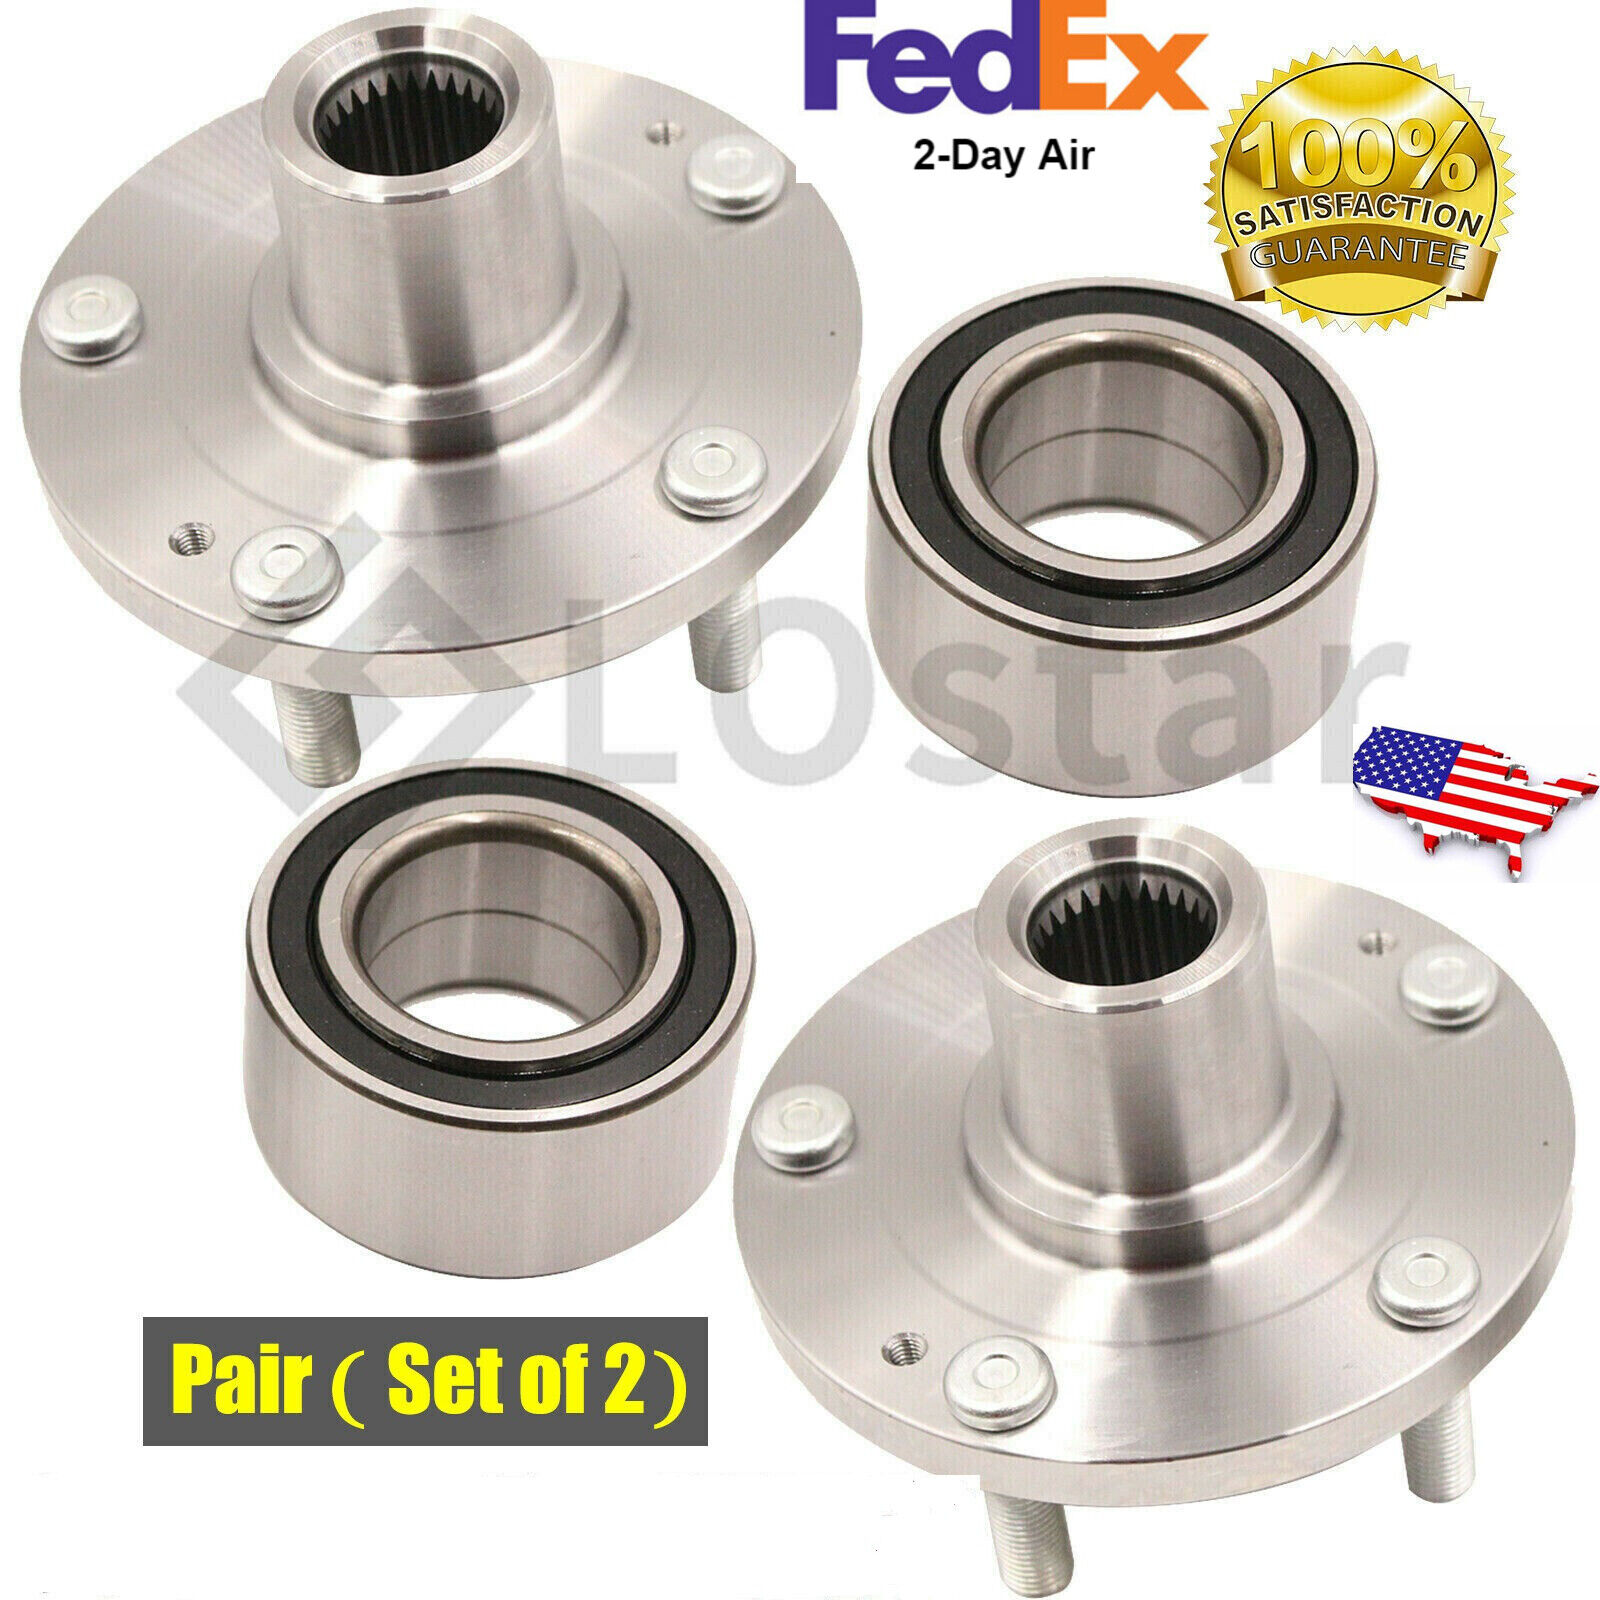 Pair(2) Front Wheel Hub & bearing sets fits 01-06 Hyundai Santa Fe 05-09 Tucson